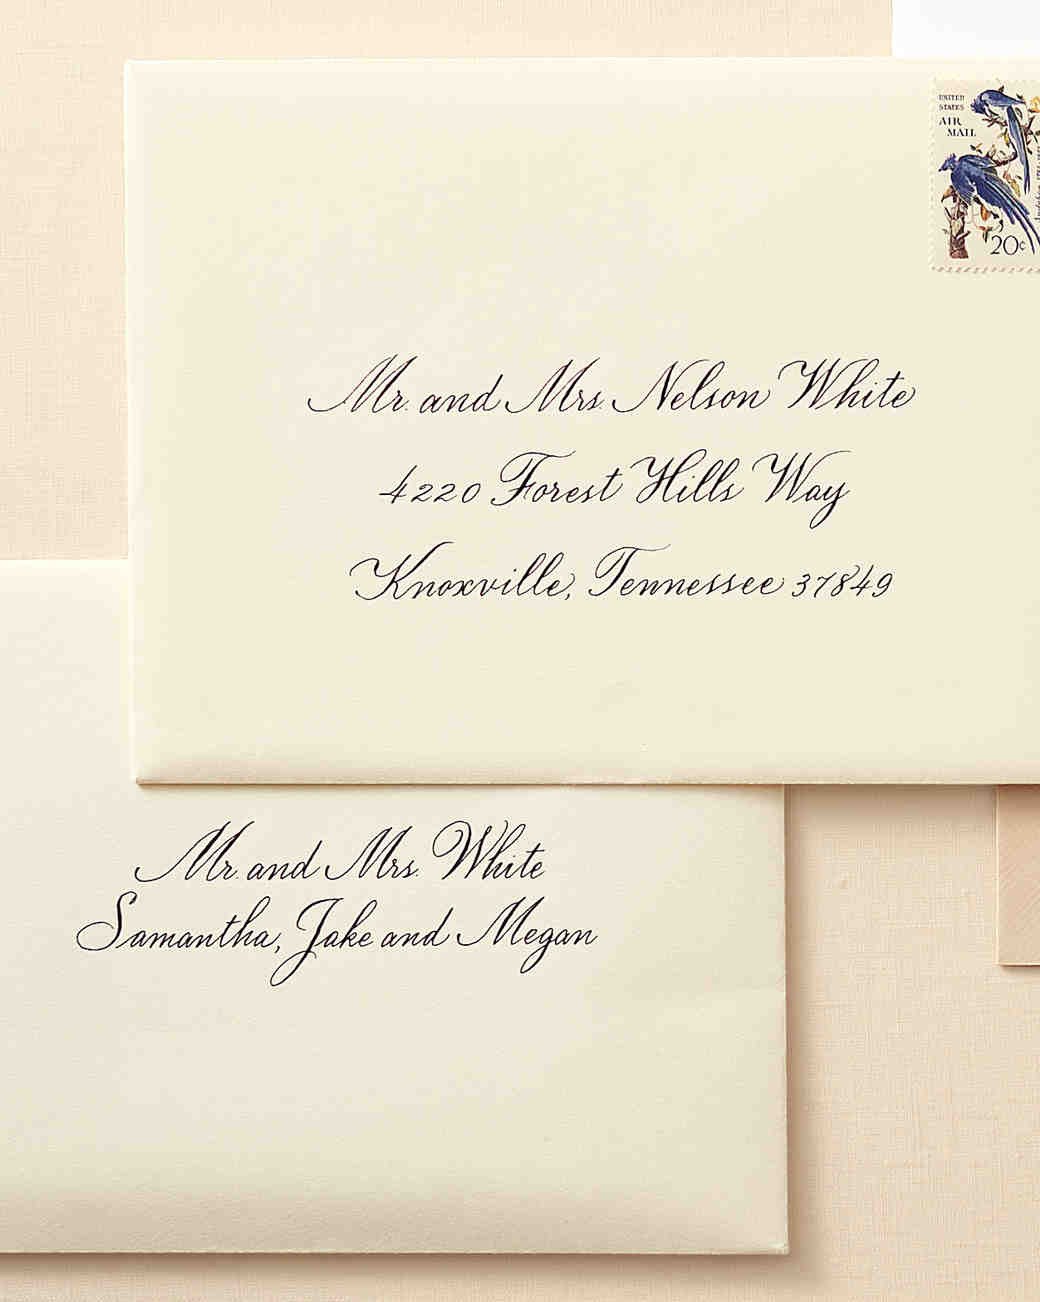 How To Properly Address Wedding Invitations
 How to Address Guests on Wedding Invitation Envelopes